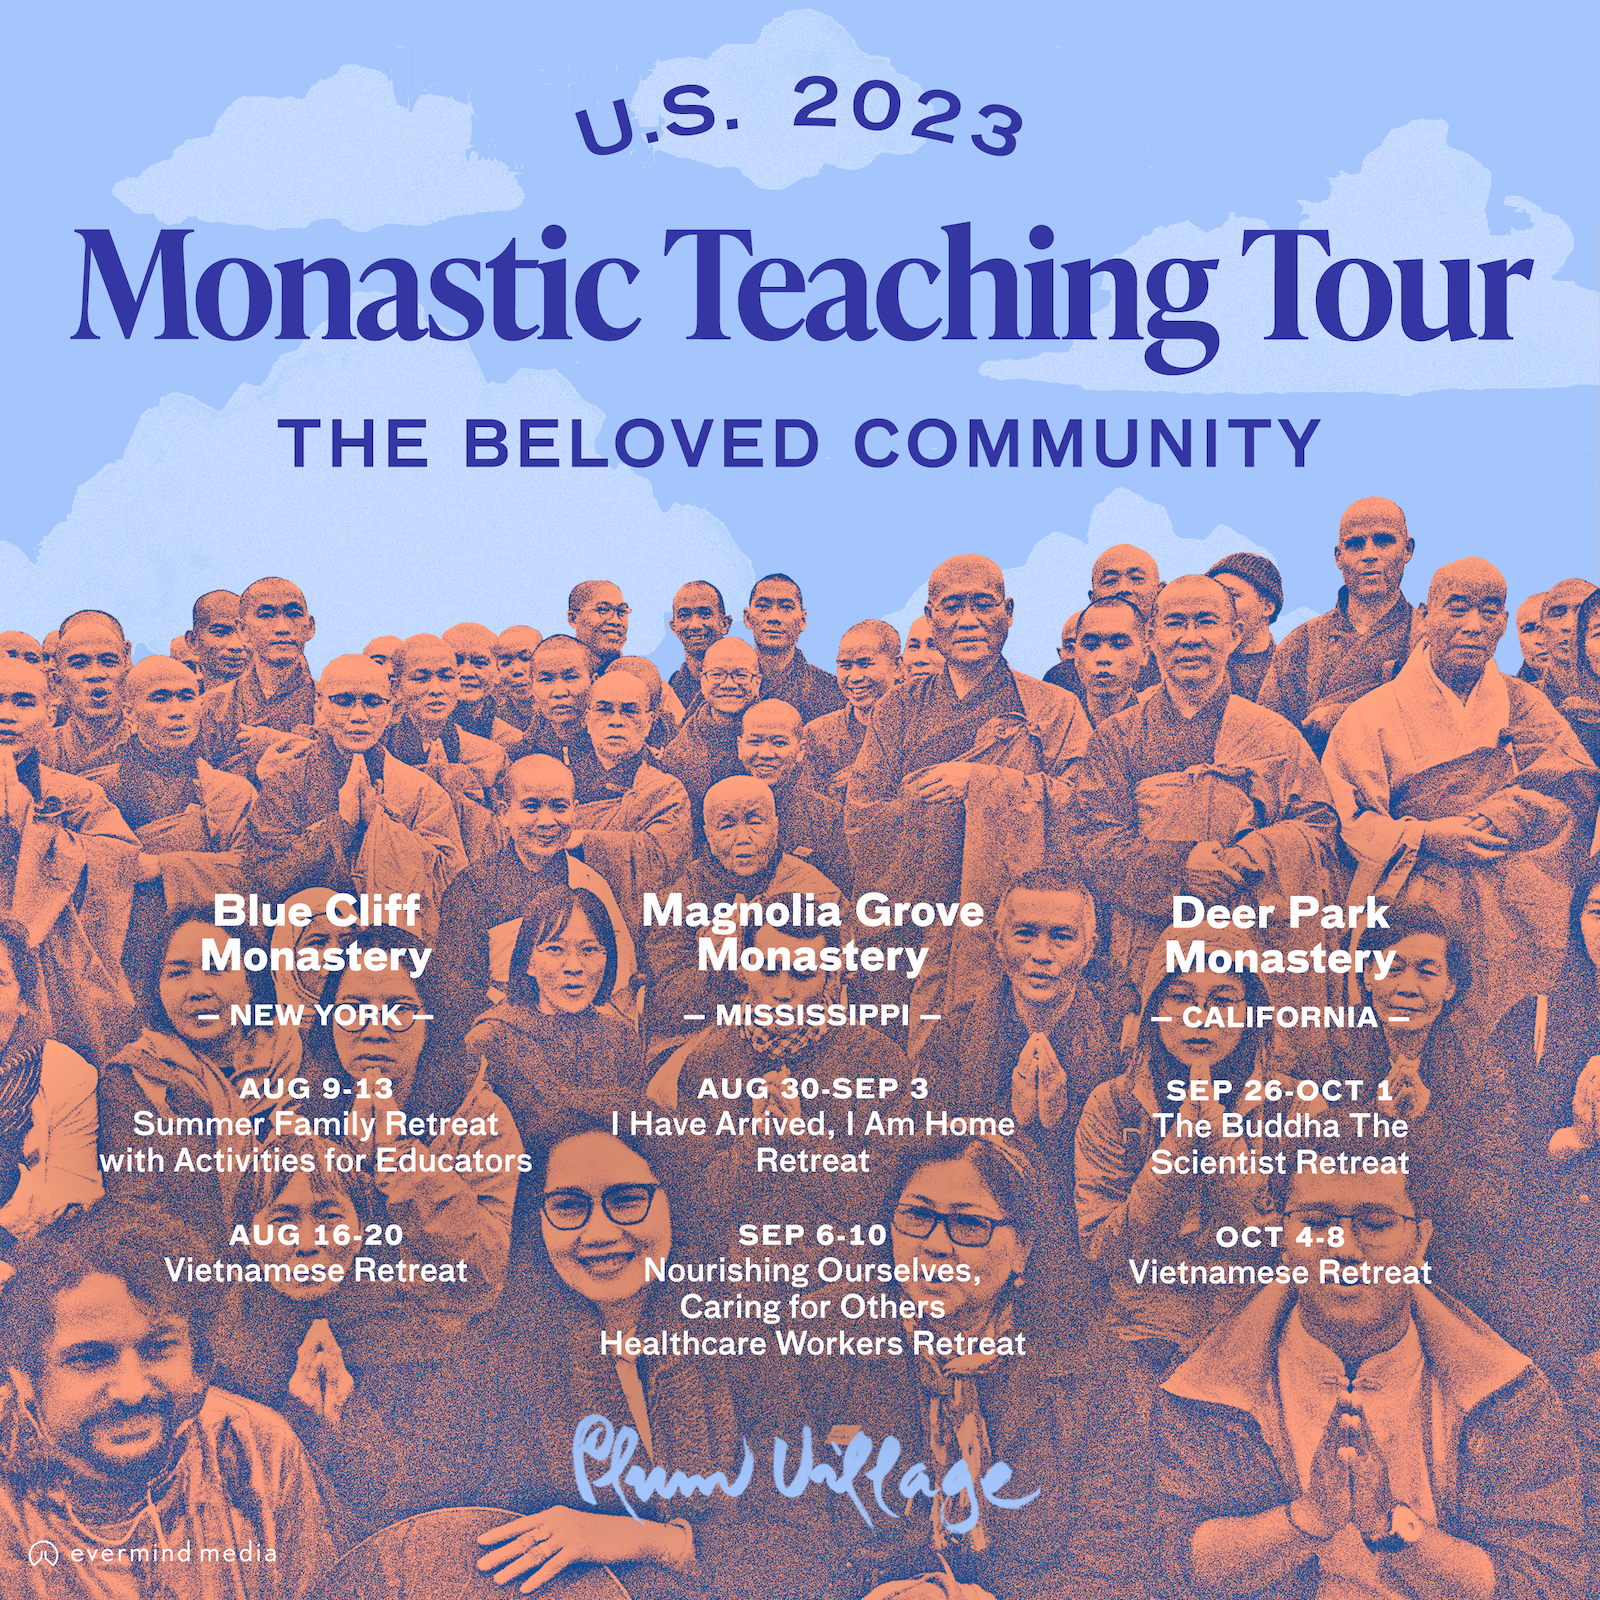 Monastic Teaching Tour: Vietnamese Retreat at Blue Cliff Monastery